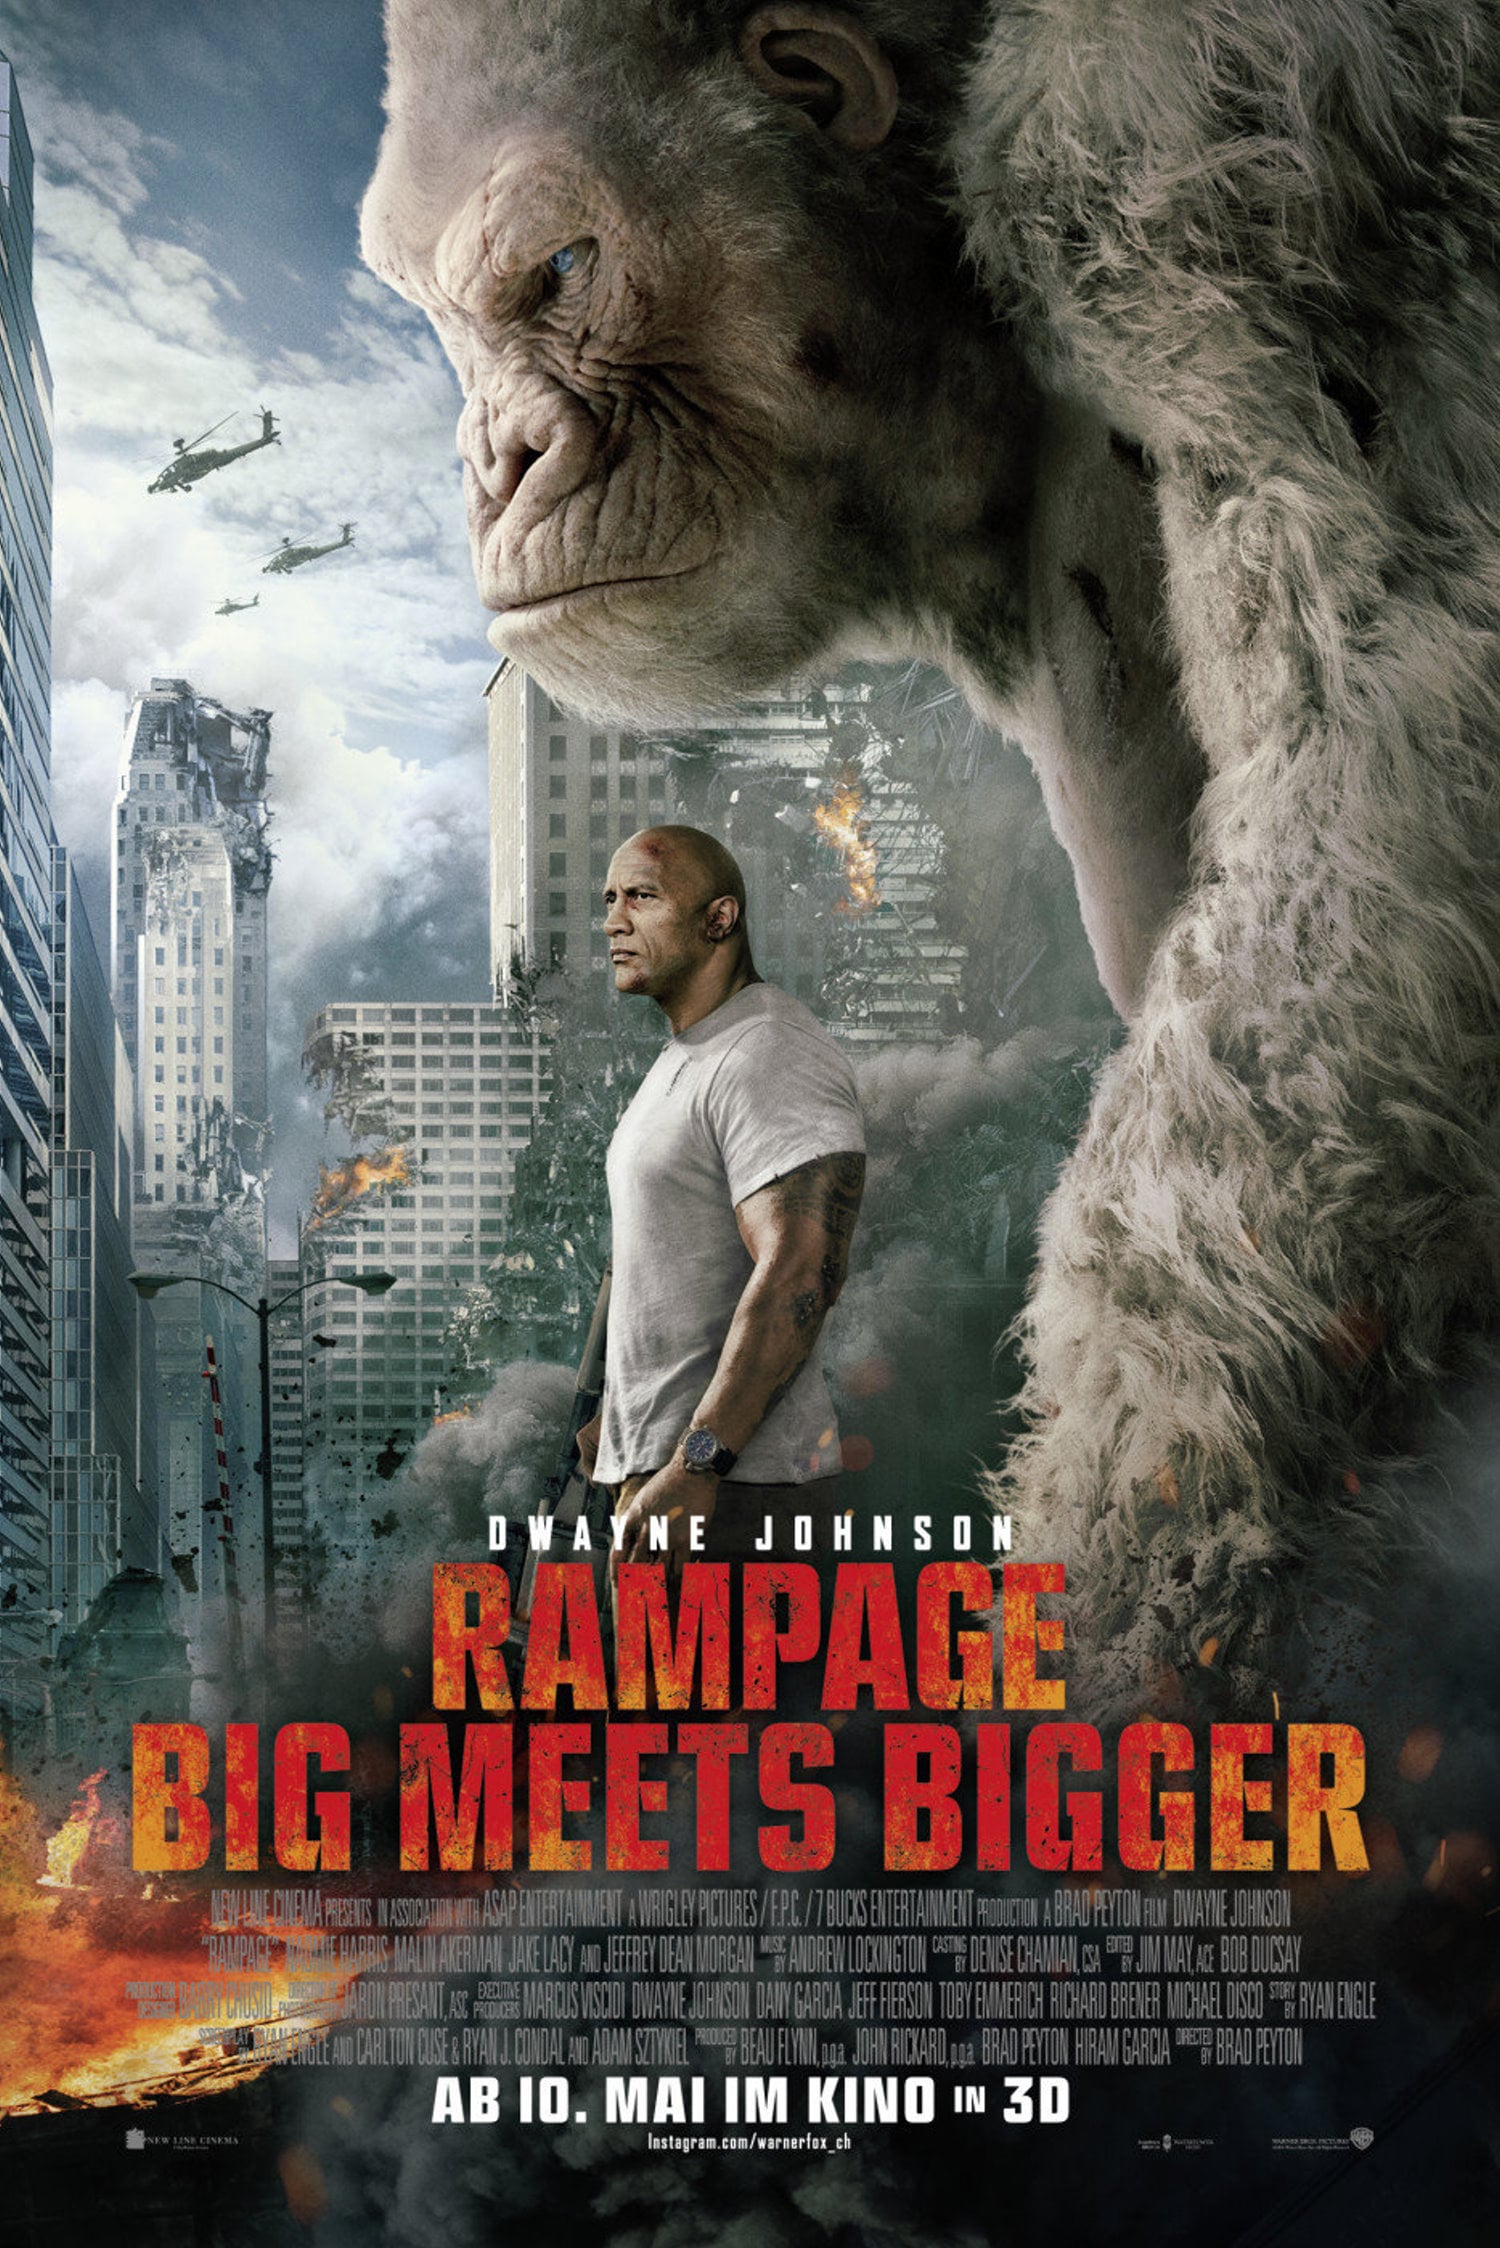 Plakat von "Rampage - Big meets Bigger"